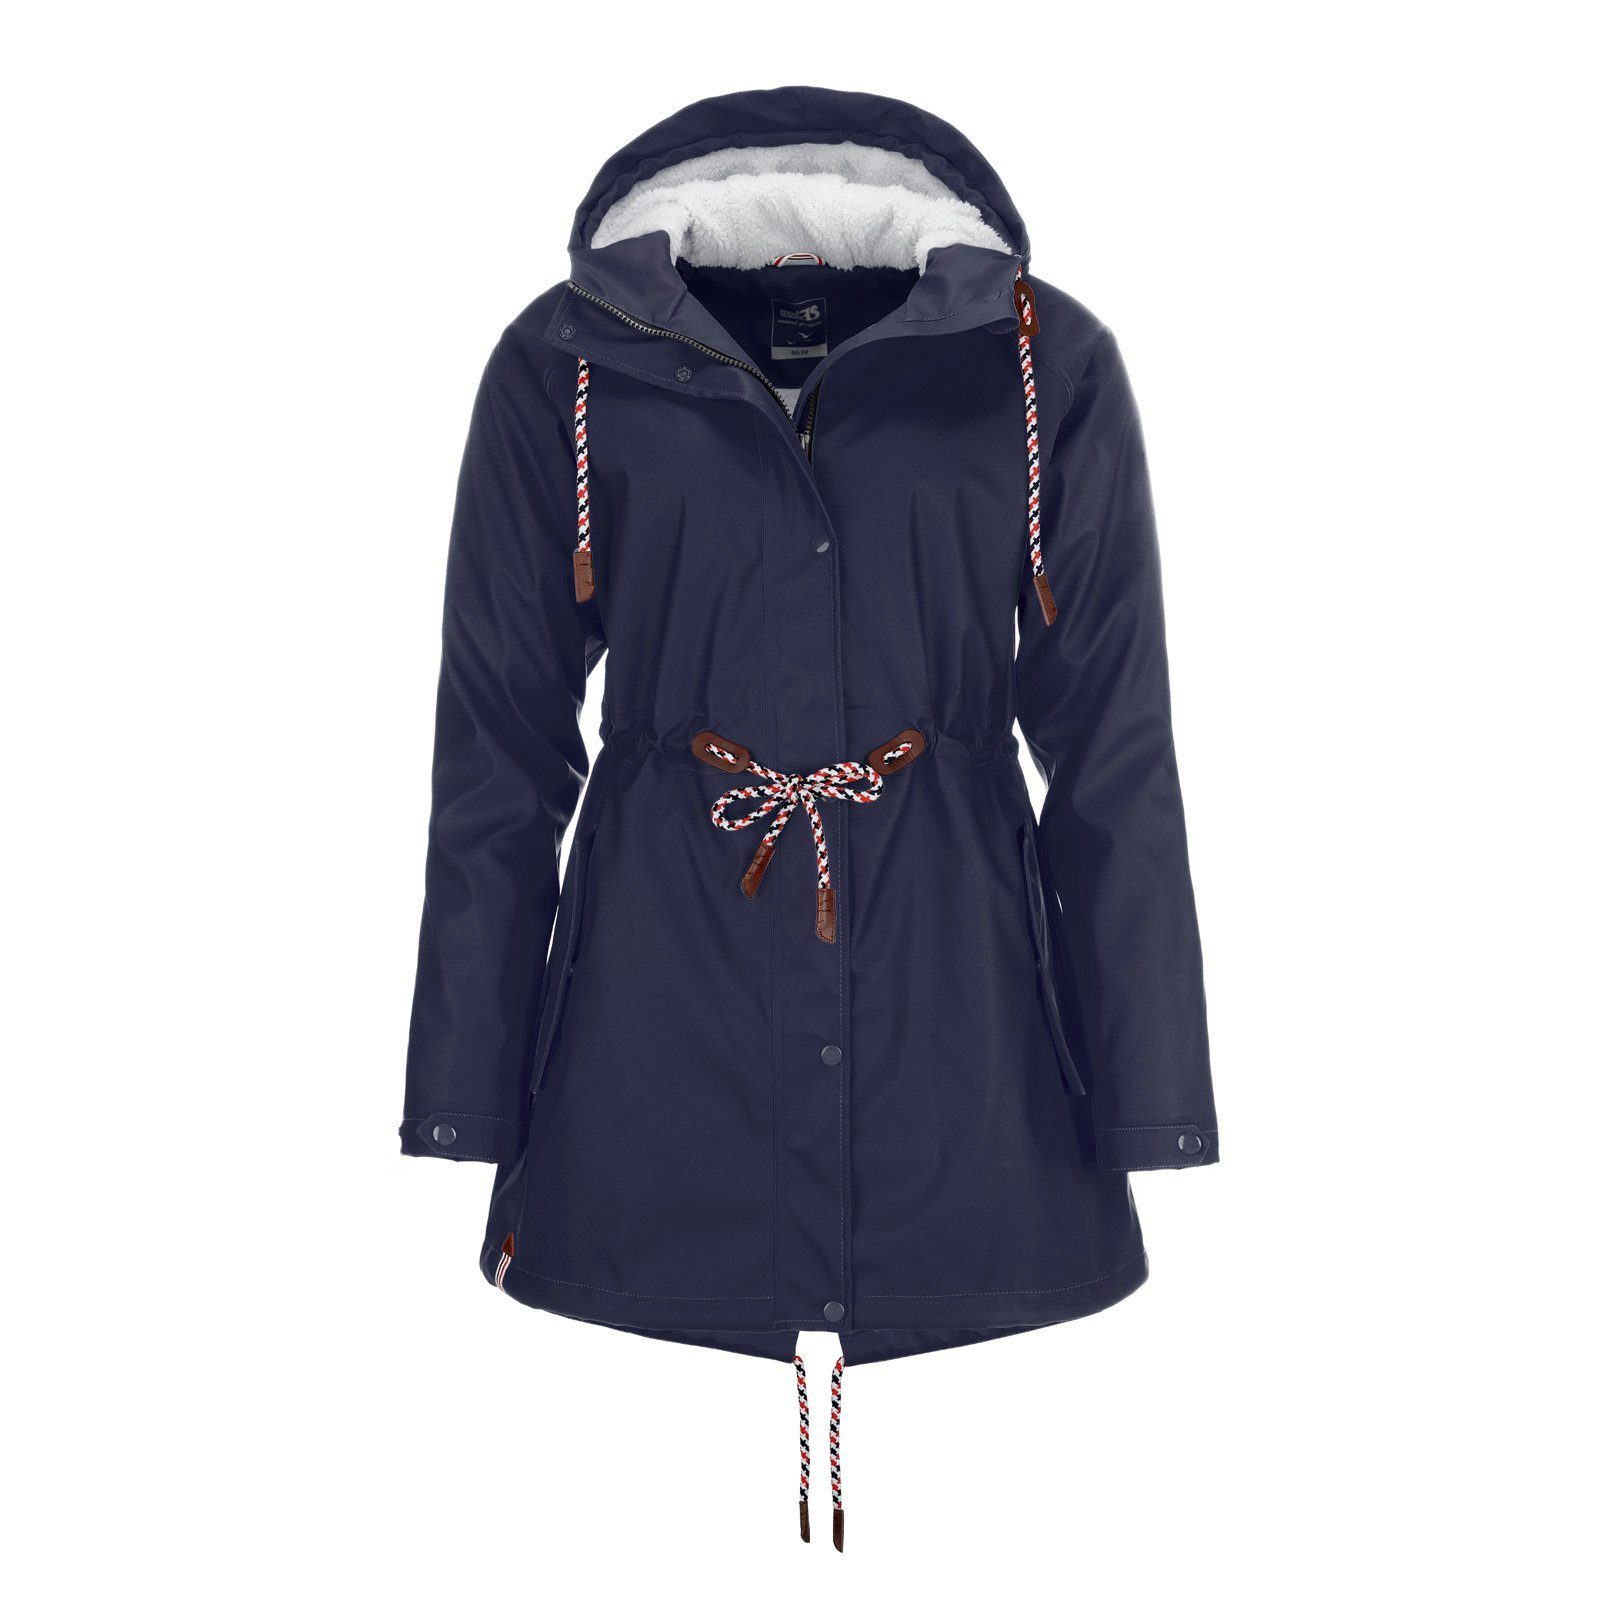 modAS Regenjacke Damen Regenmantel aus PU - Wasserdichte Jacke mit Teddy-Fleece-Futter marine